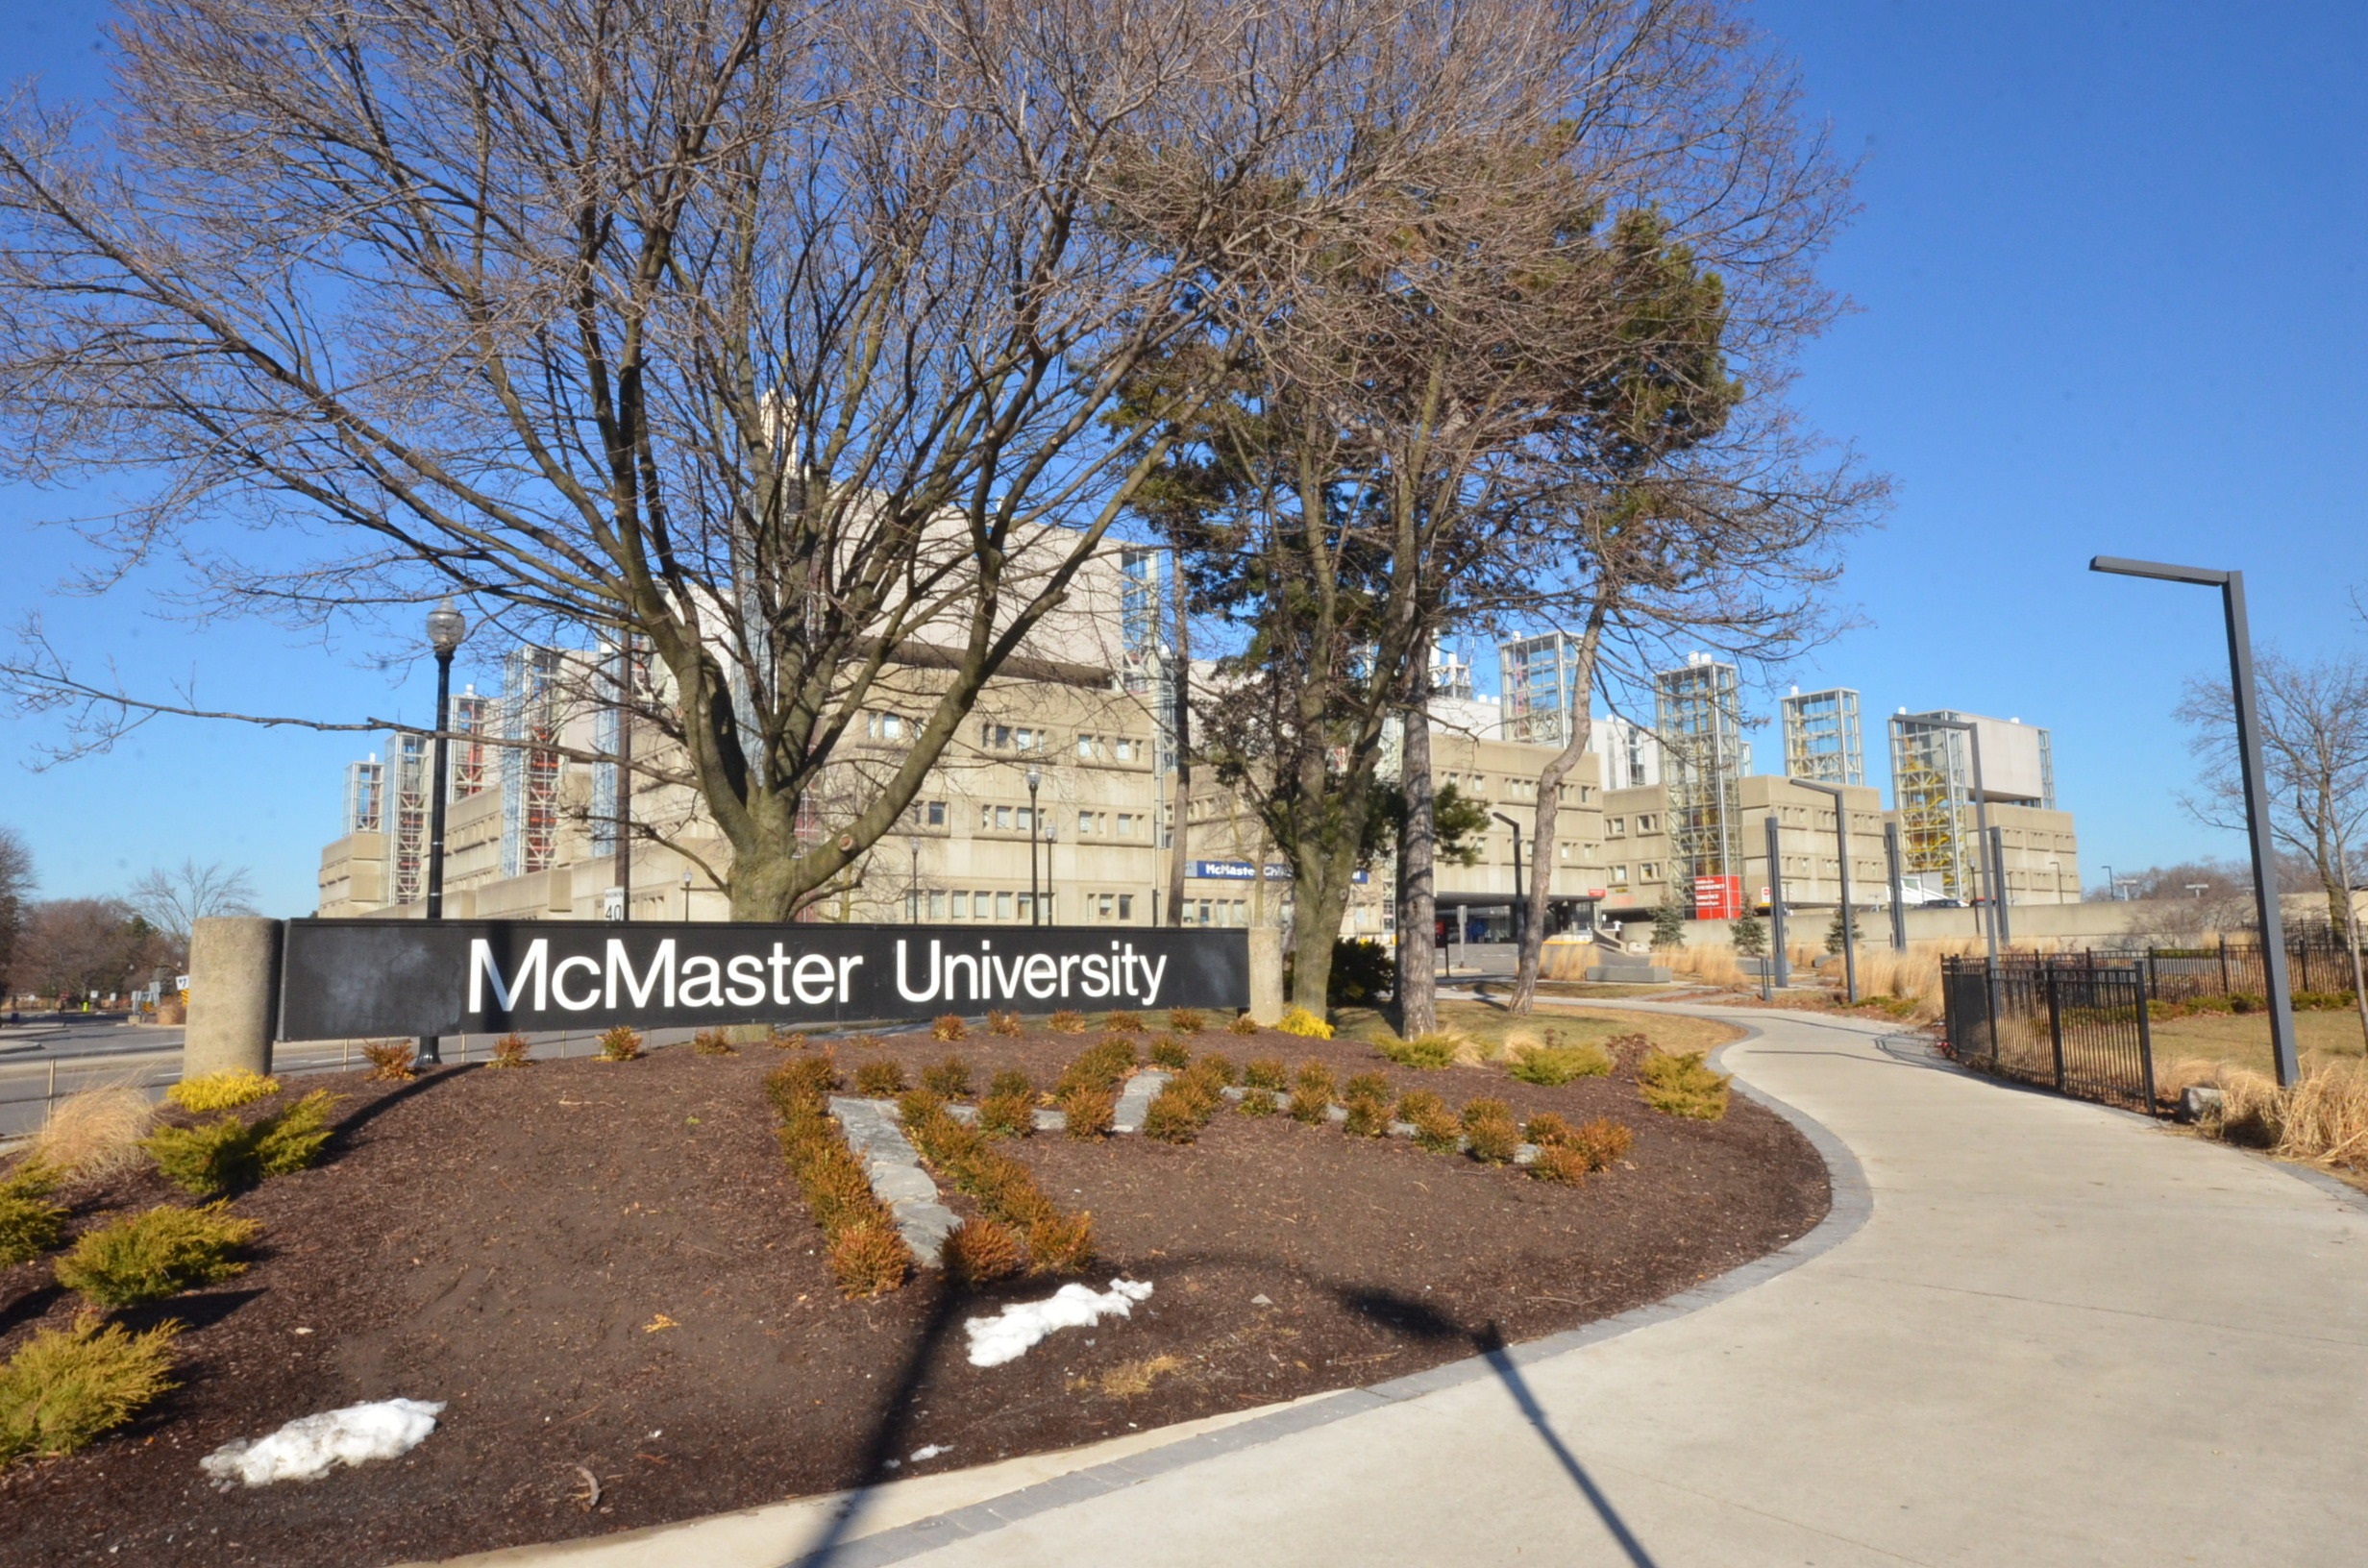 McMaster University 